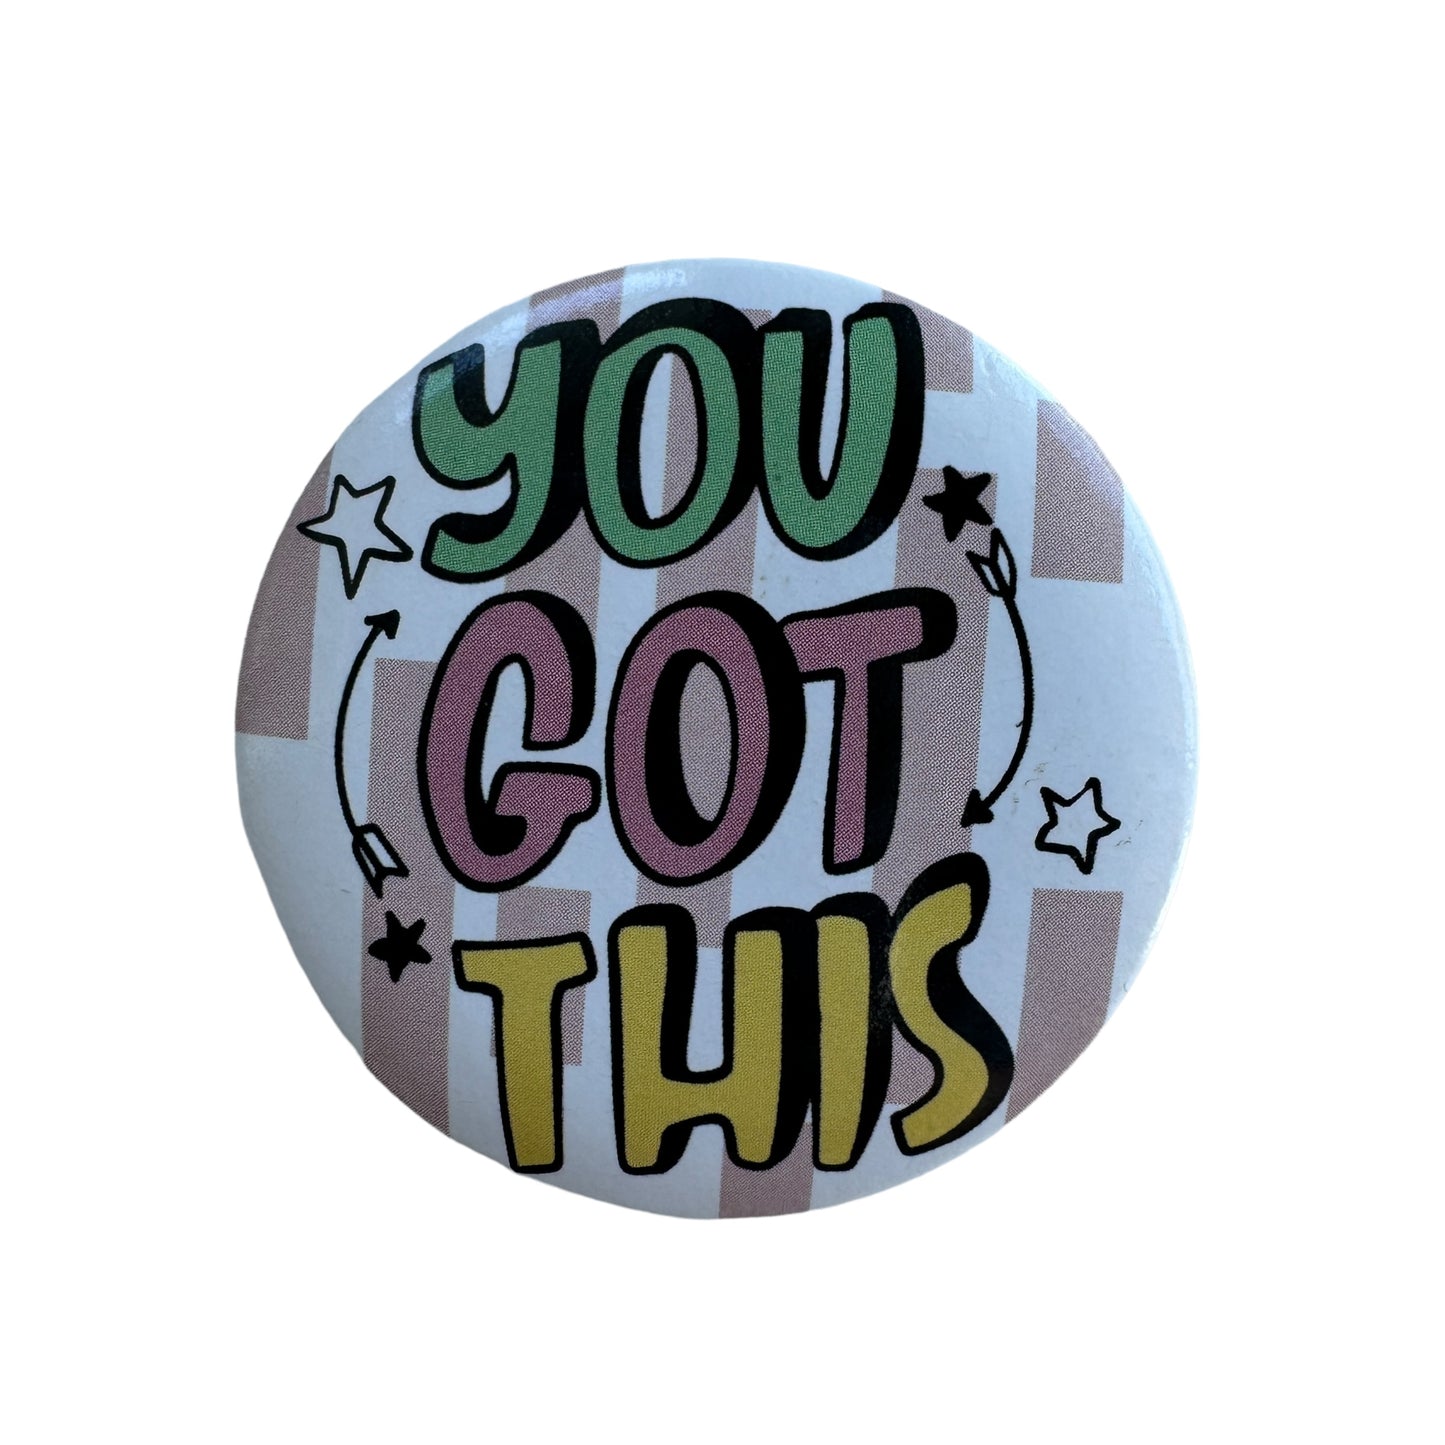 Pin — 'You Got This'